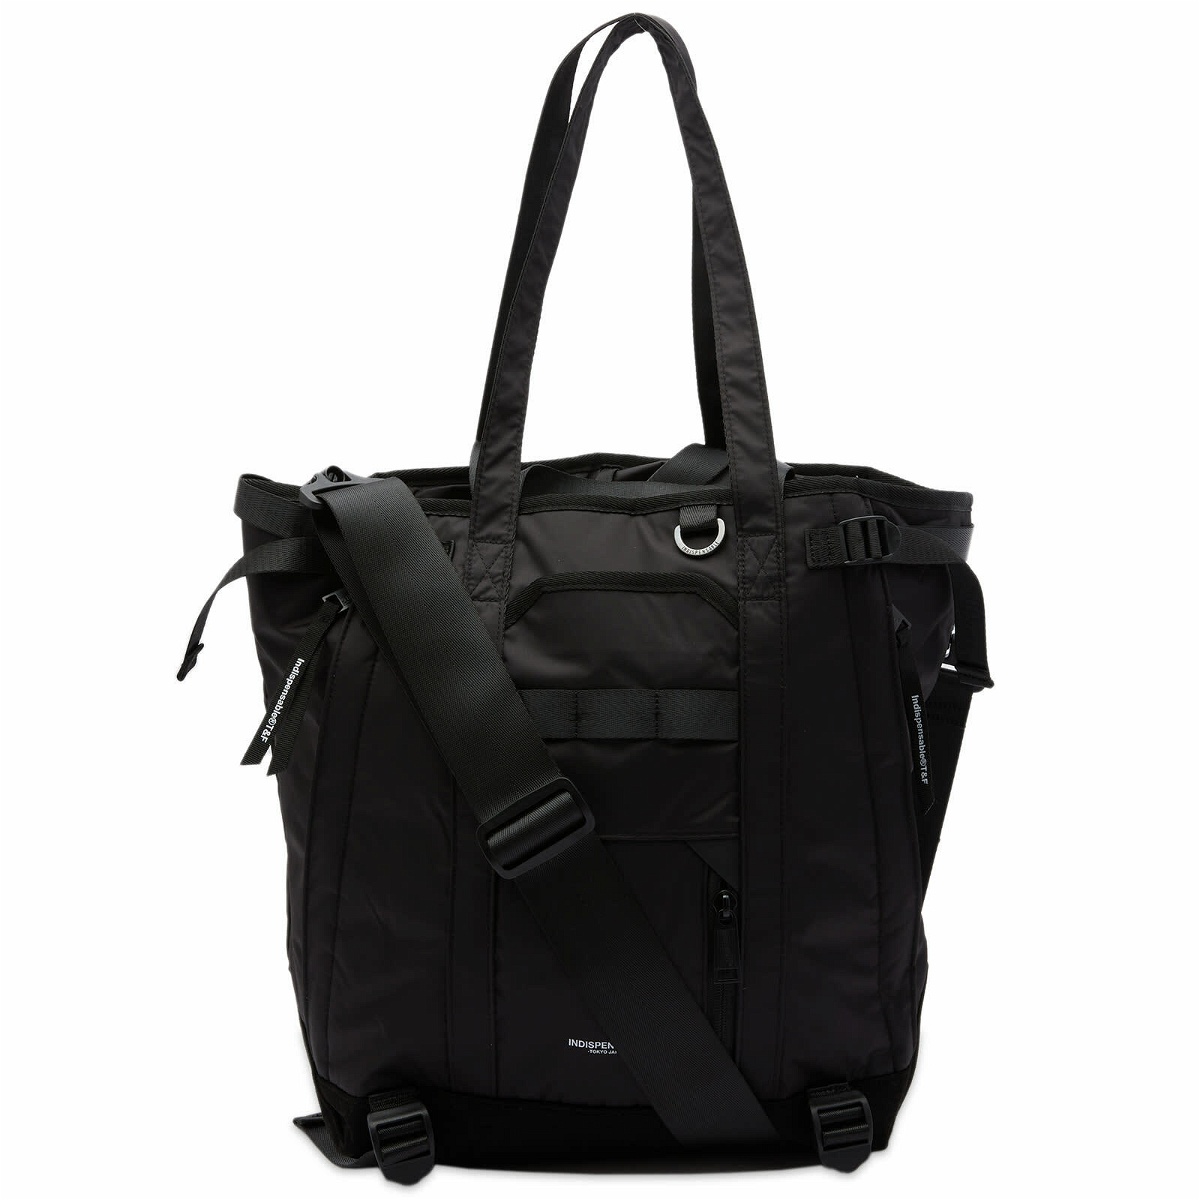 Photo: Indispensable Indispensible Hangger Econyl 3-Way Tote Bag in Black